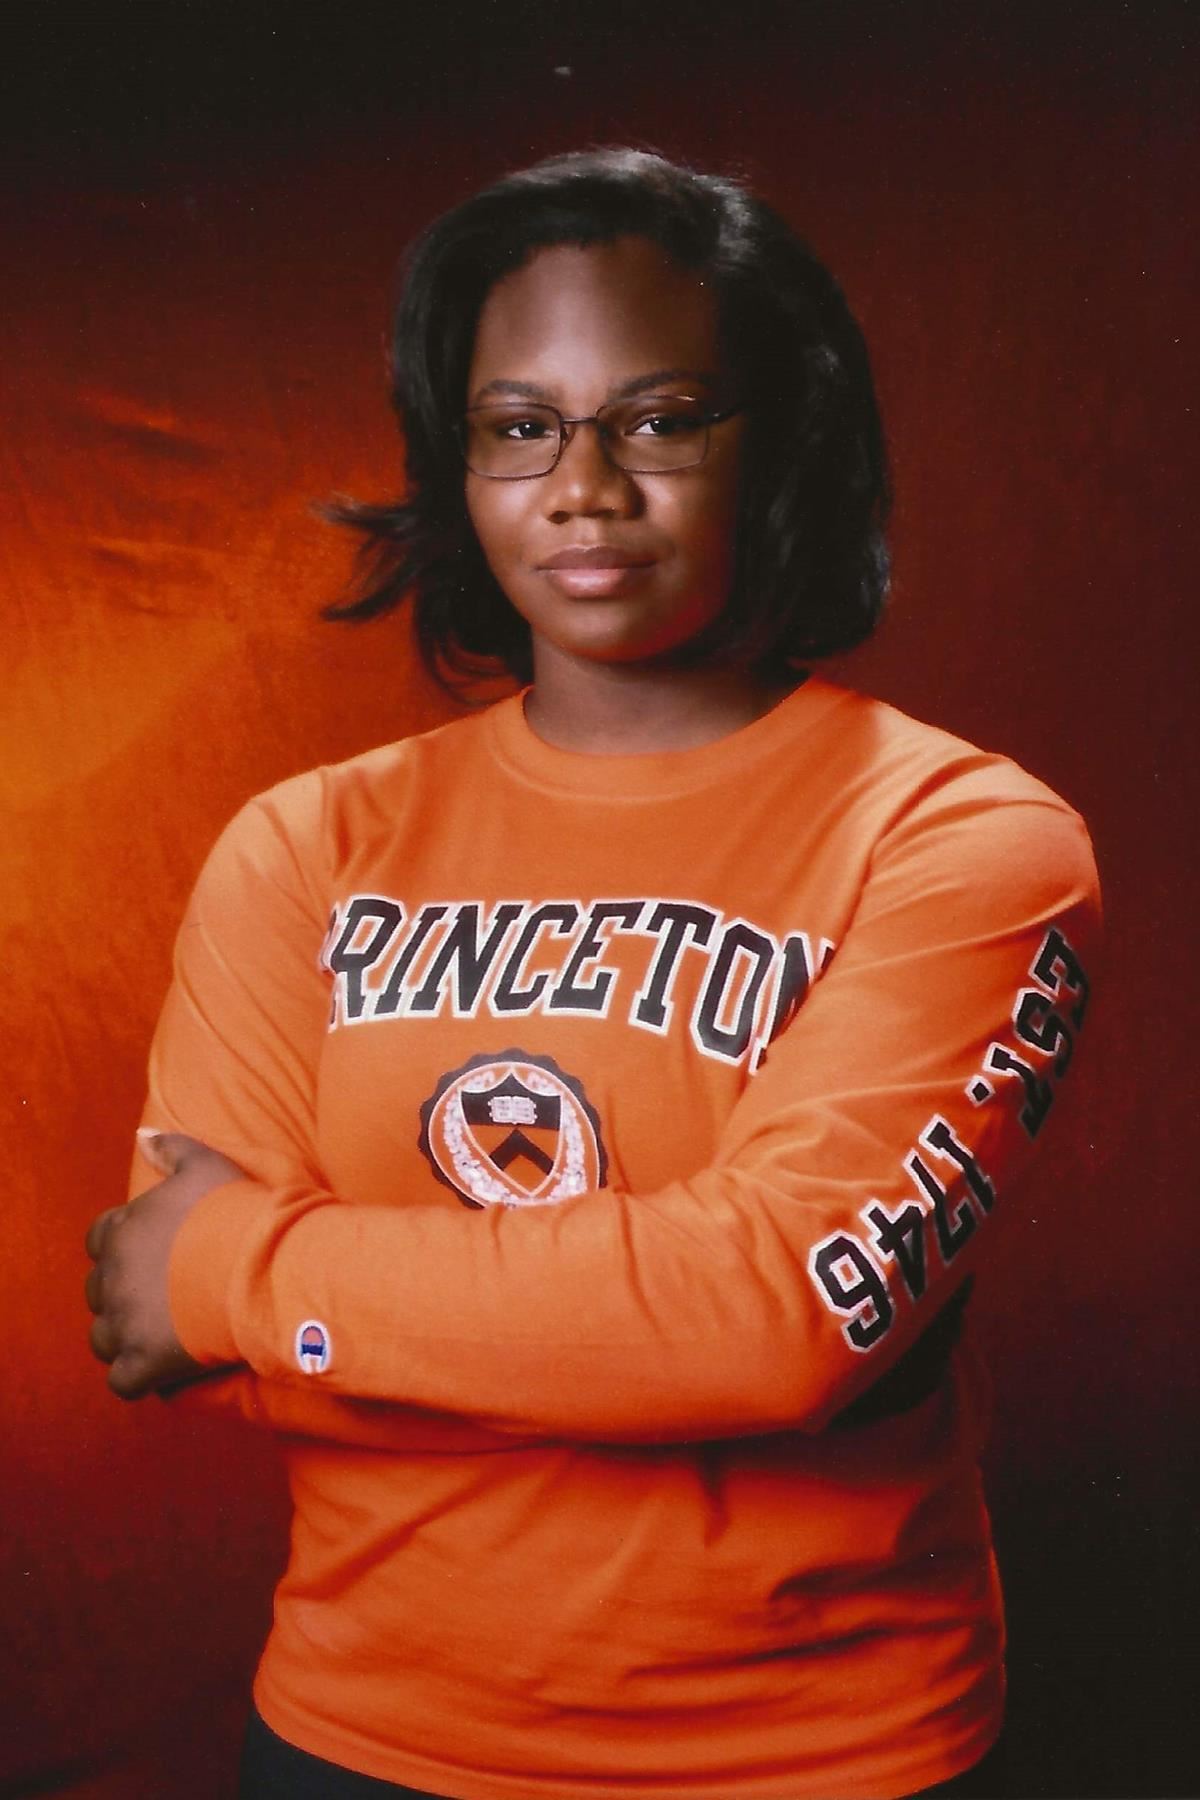 Langham Creek High School graduate Makenna Marshall will attend Princeton University in Princeton, N.J.